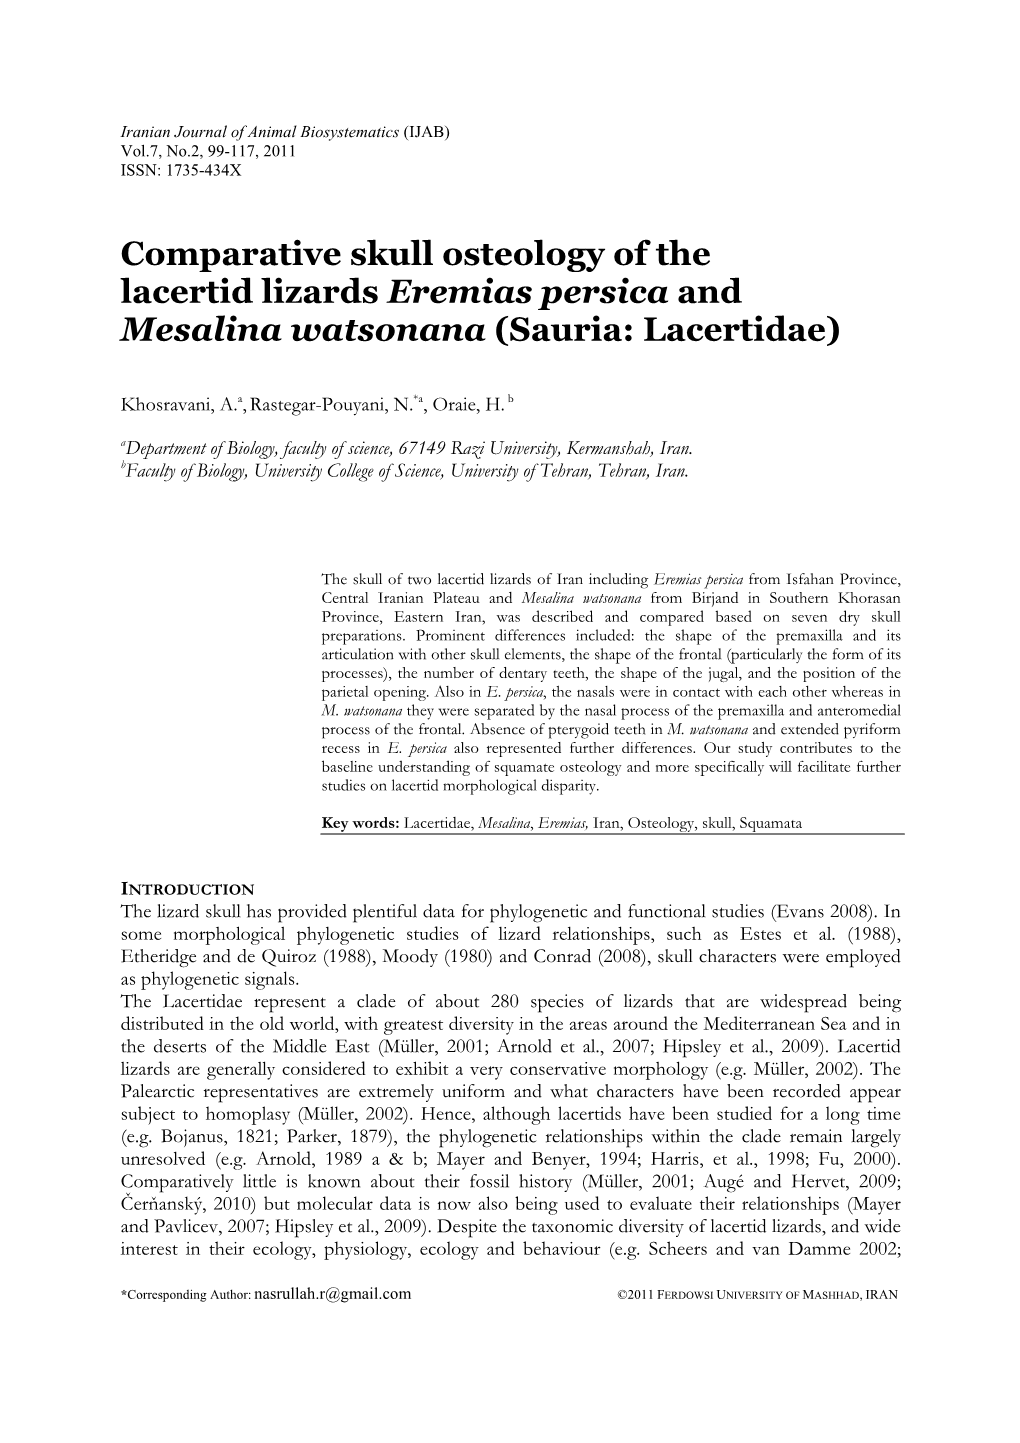 Comparative Skull Osteology of the Lacertid Lizards Eremias Persica and Mesalina Watsonana (Sauria: Lacertidae)